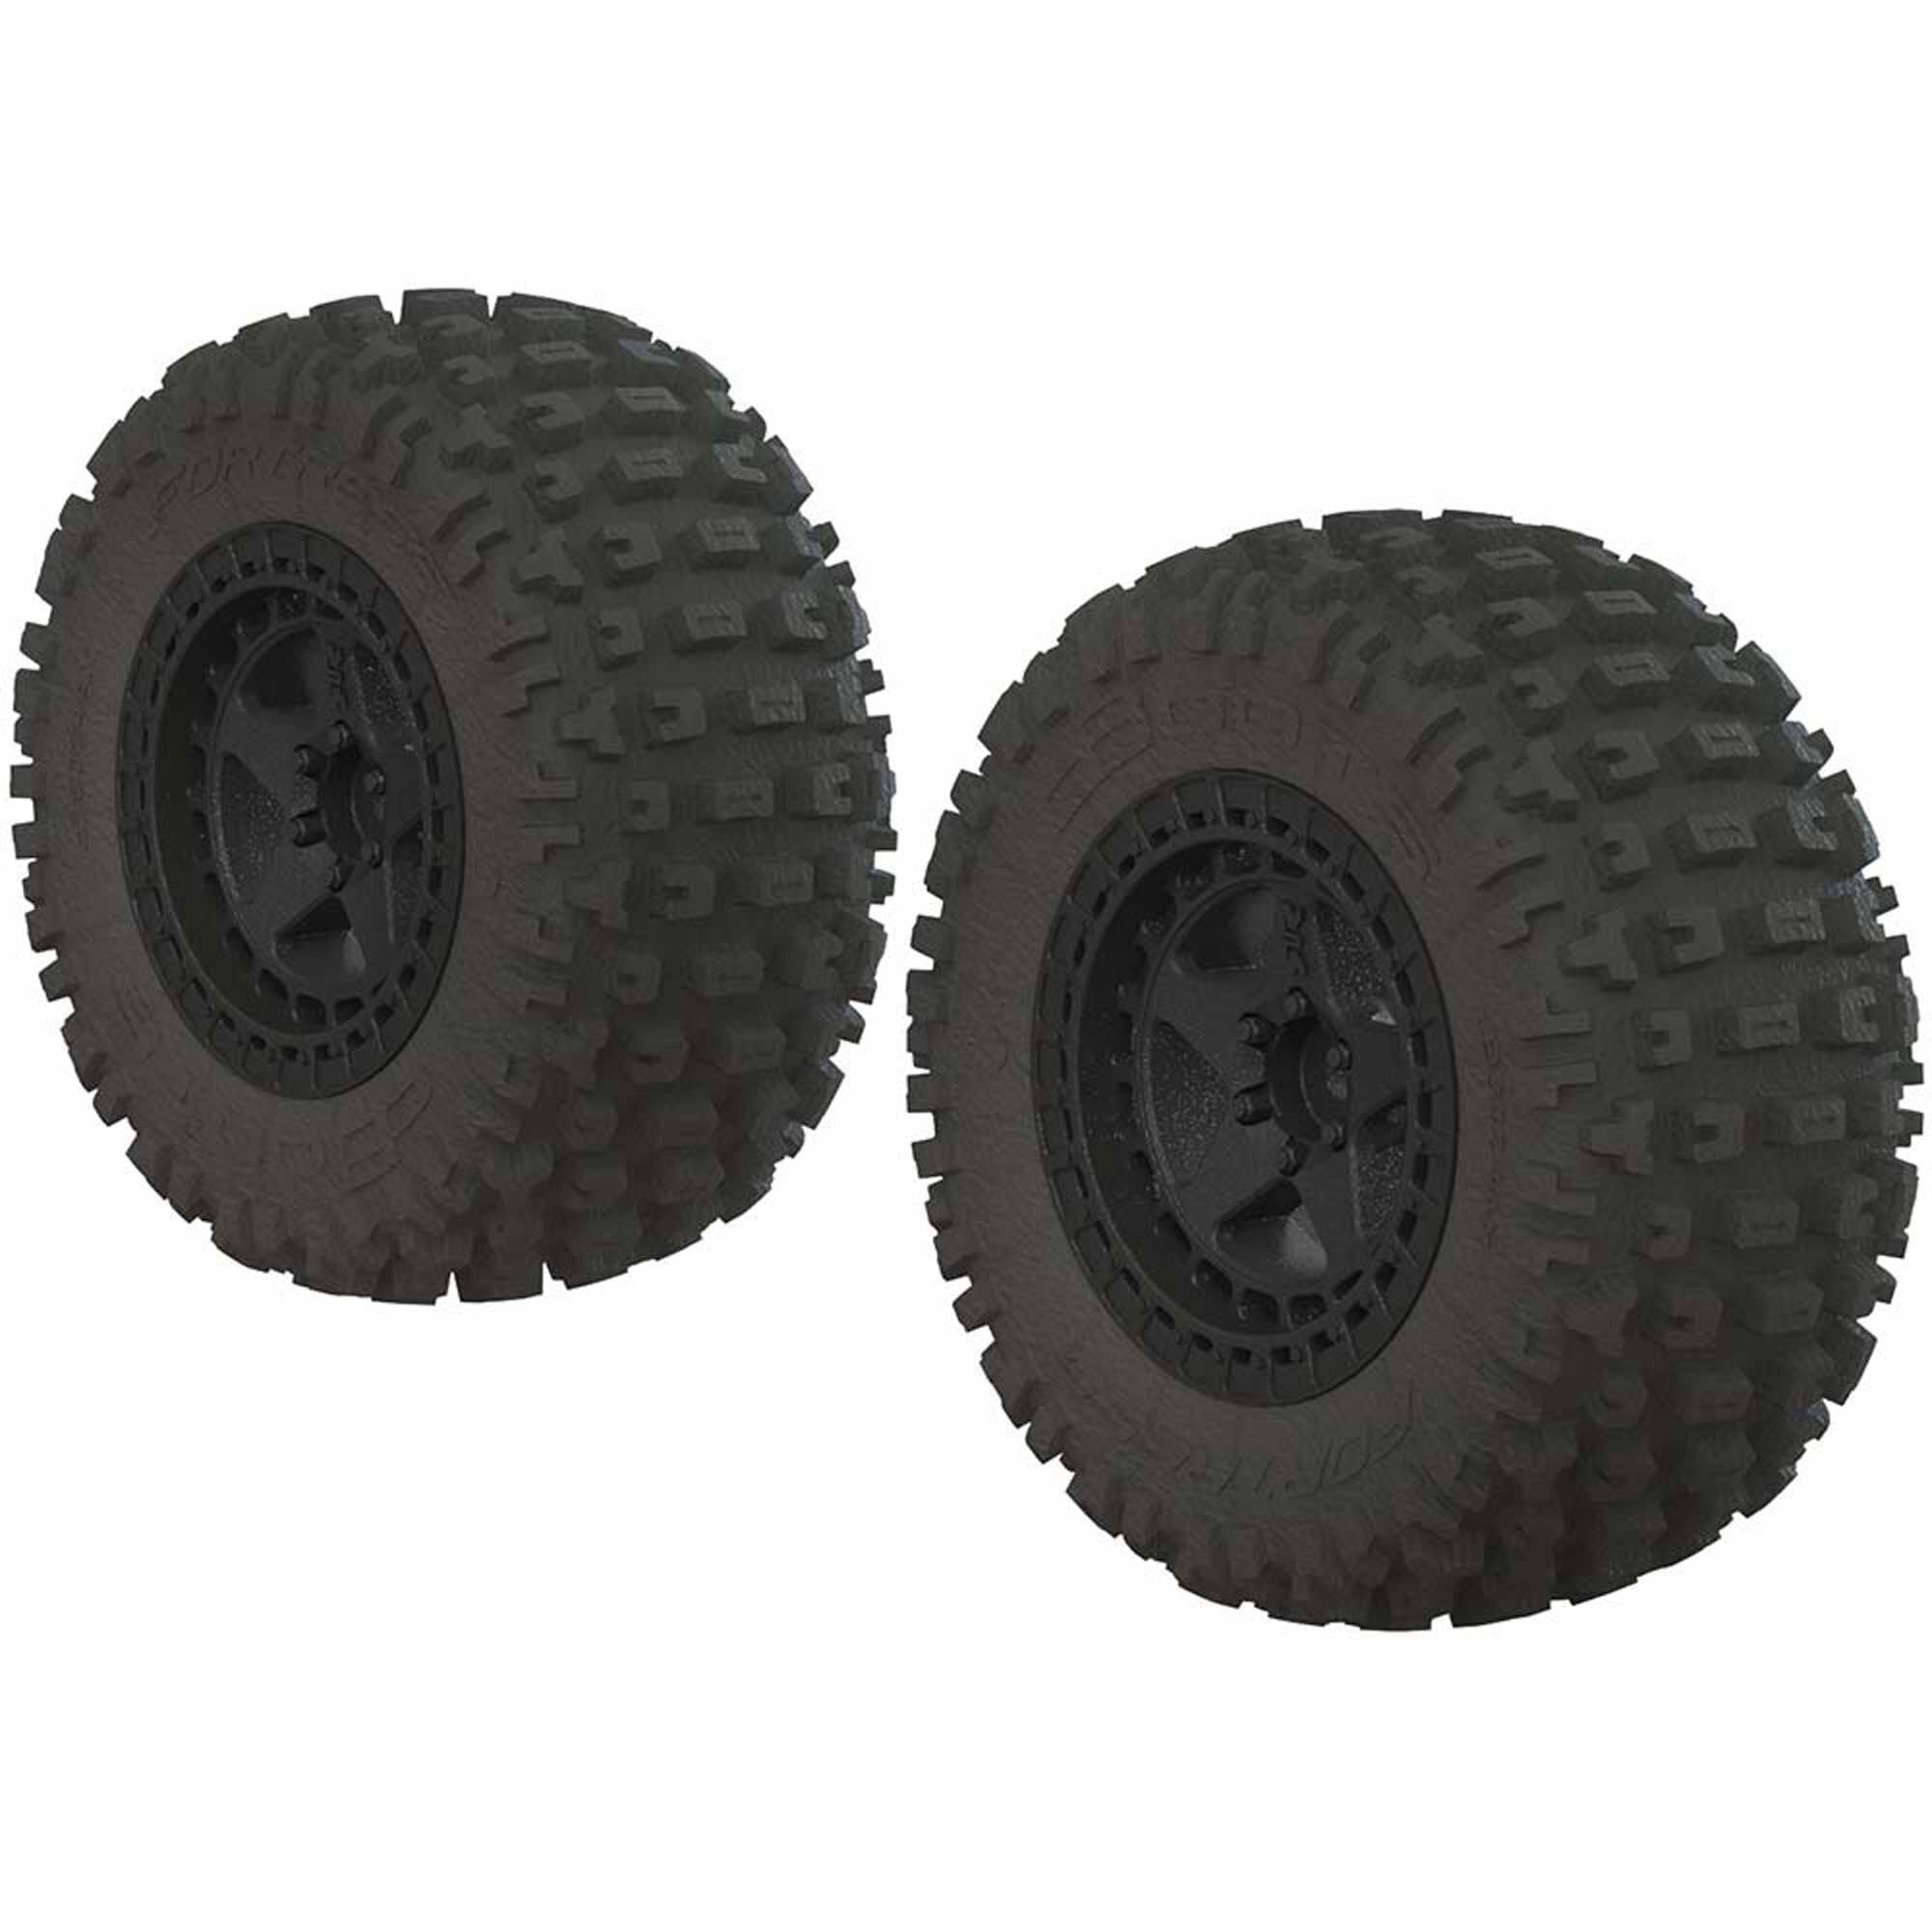 ARRMA Booots Fortress SC Tire Set - Glued, Black, 2ct